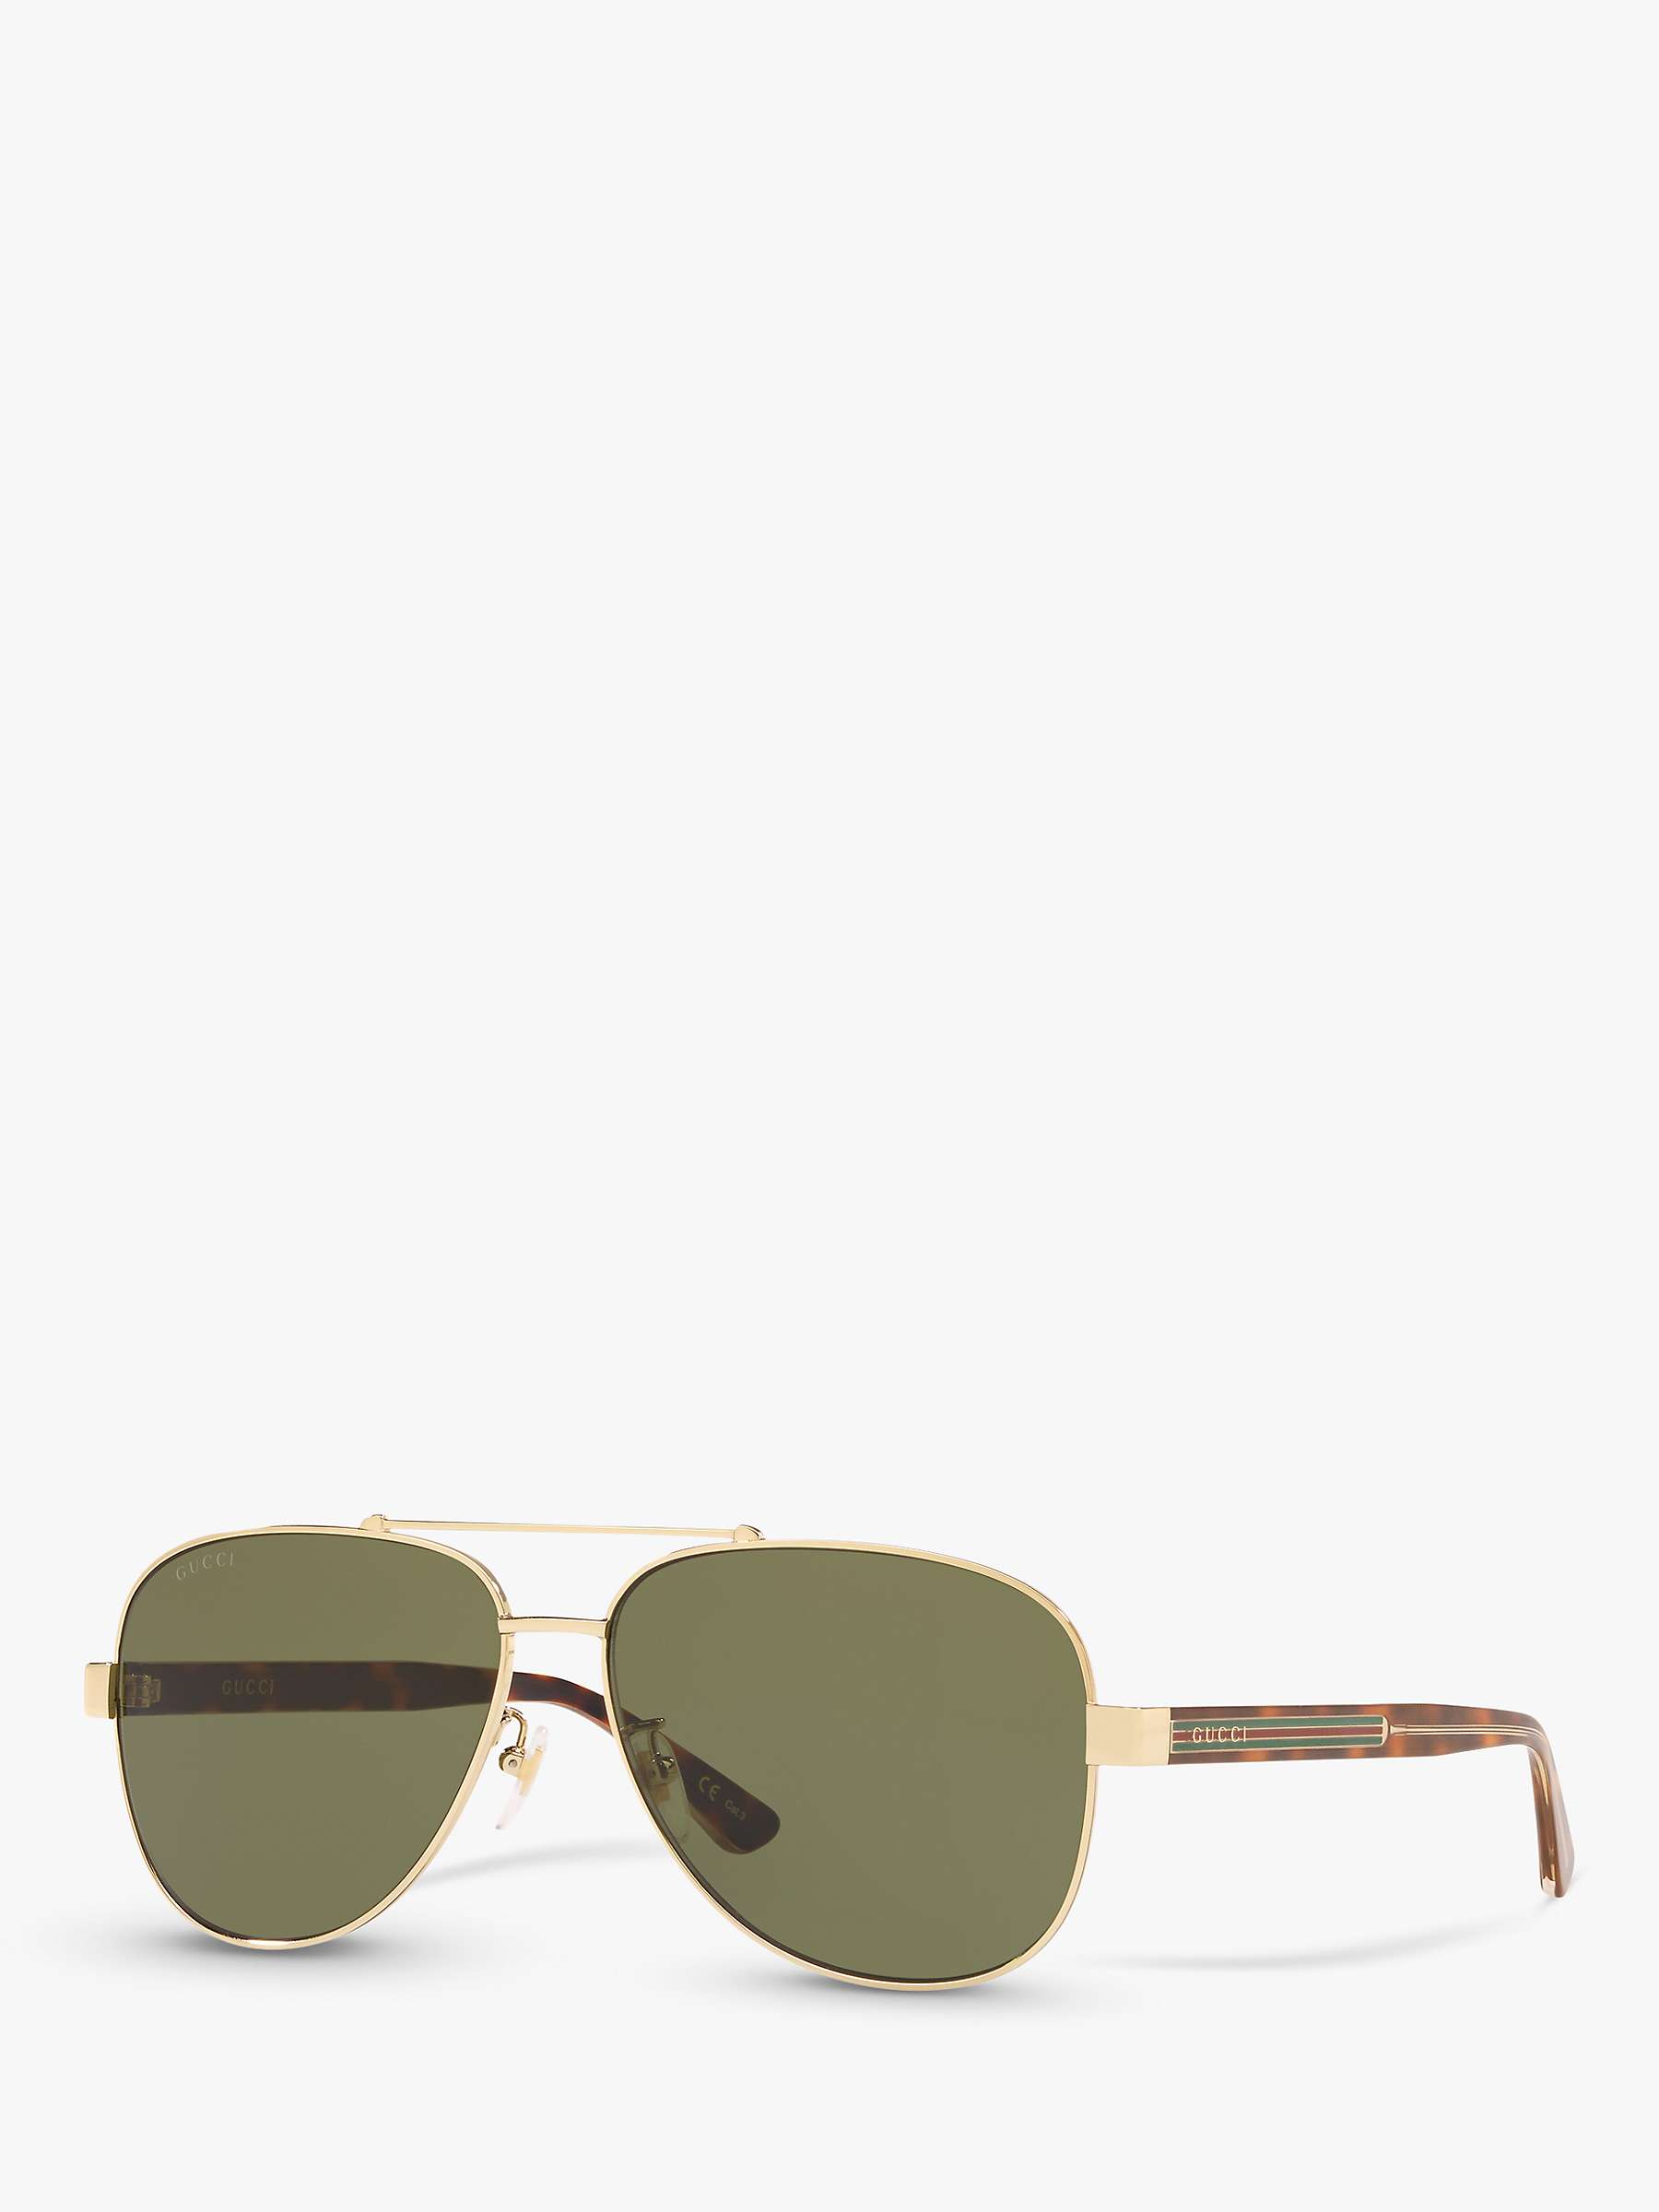 Buy Gucci GC001244 Men's Aviator Sunglasses, Gold/Green Online at johnlewis.com